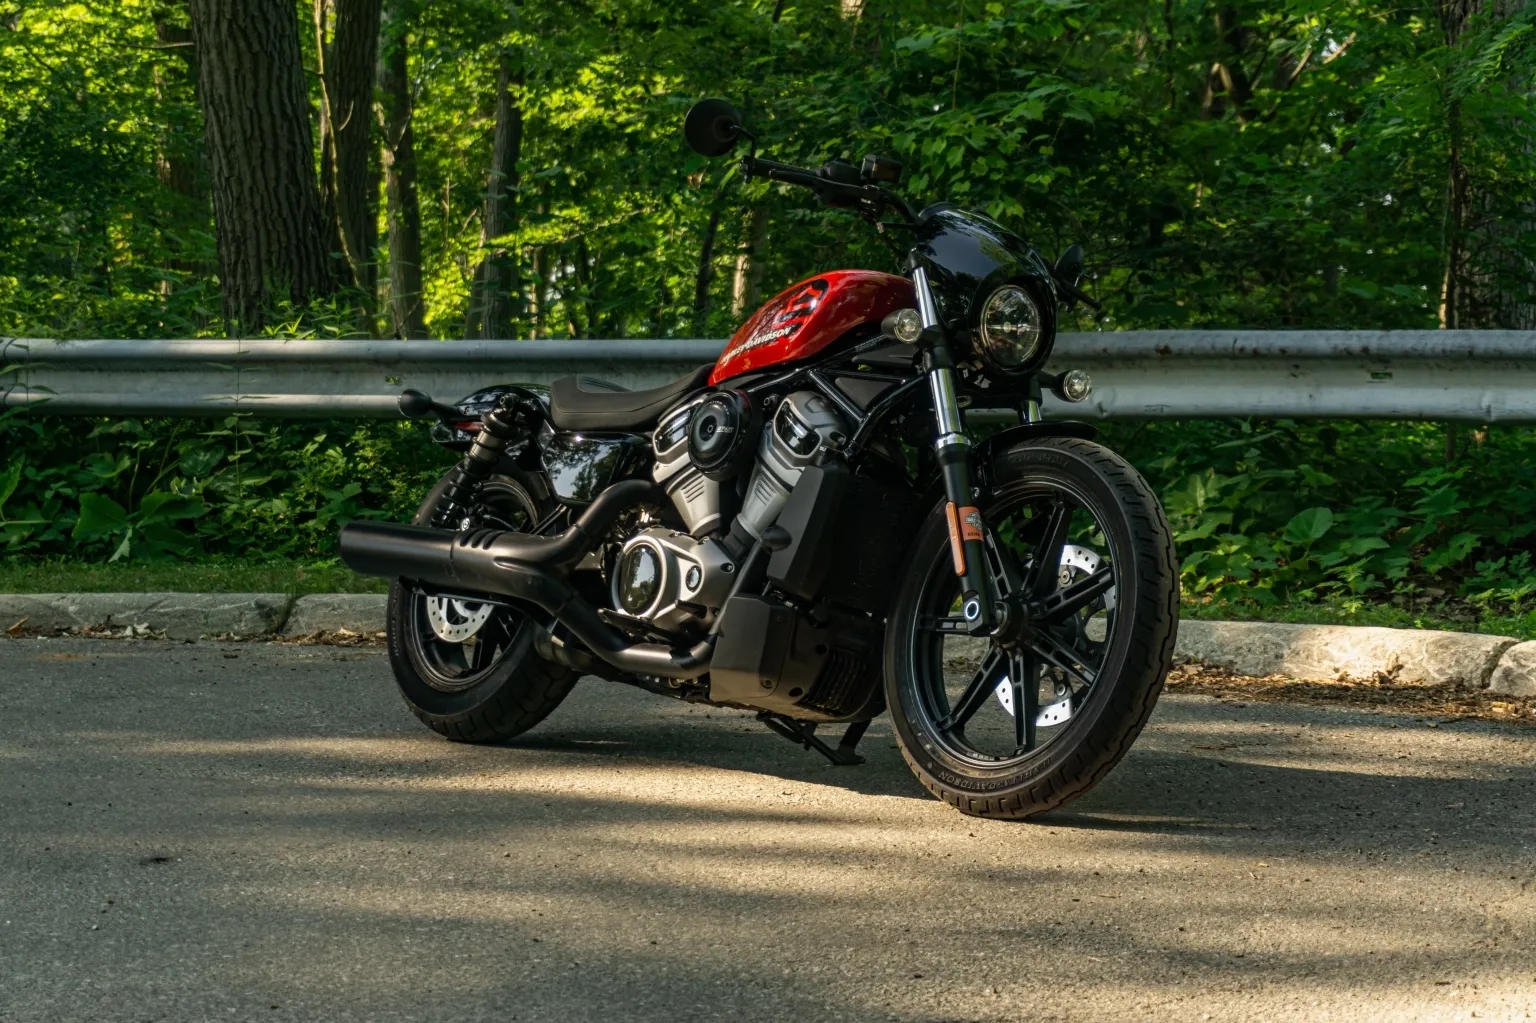 2022 Harley Davidson Nightster Review news